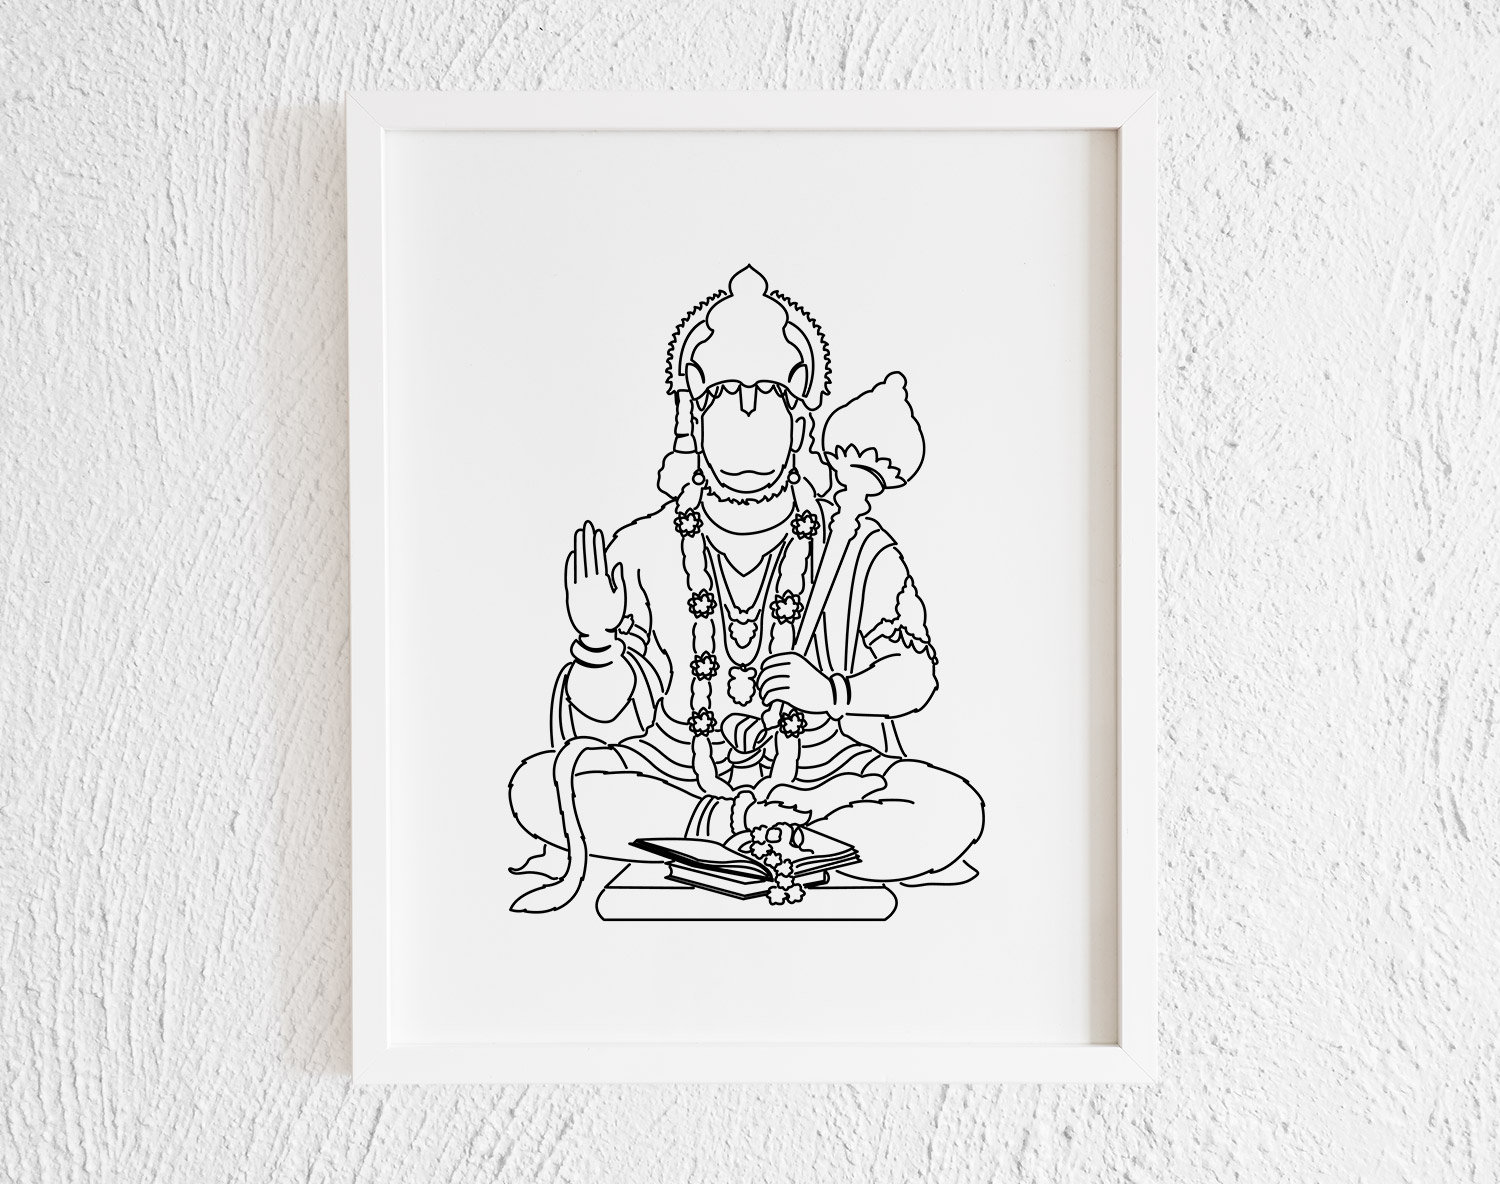 Lord hanuman drawing | How to draw hanuman ji face step by step | Hanuman जी  का चित्र आसानीसे | By All About ArtFacebook